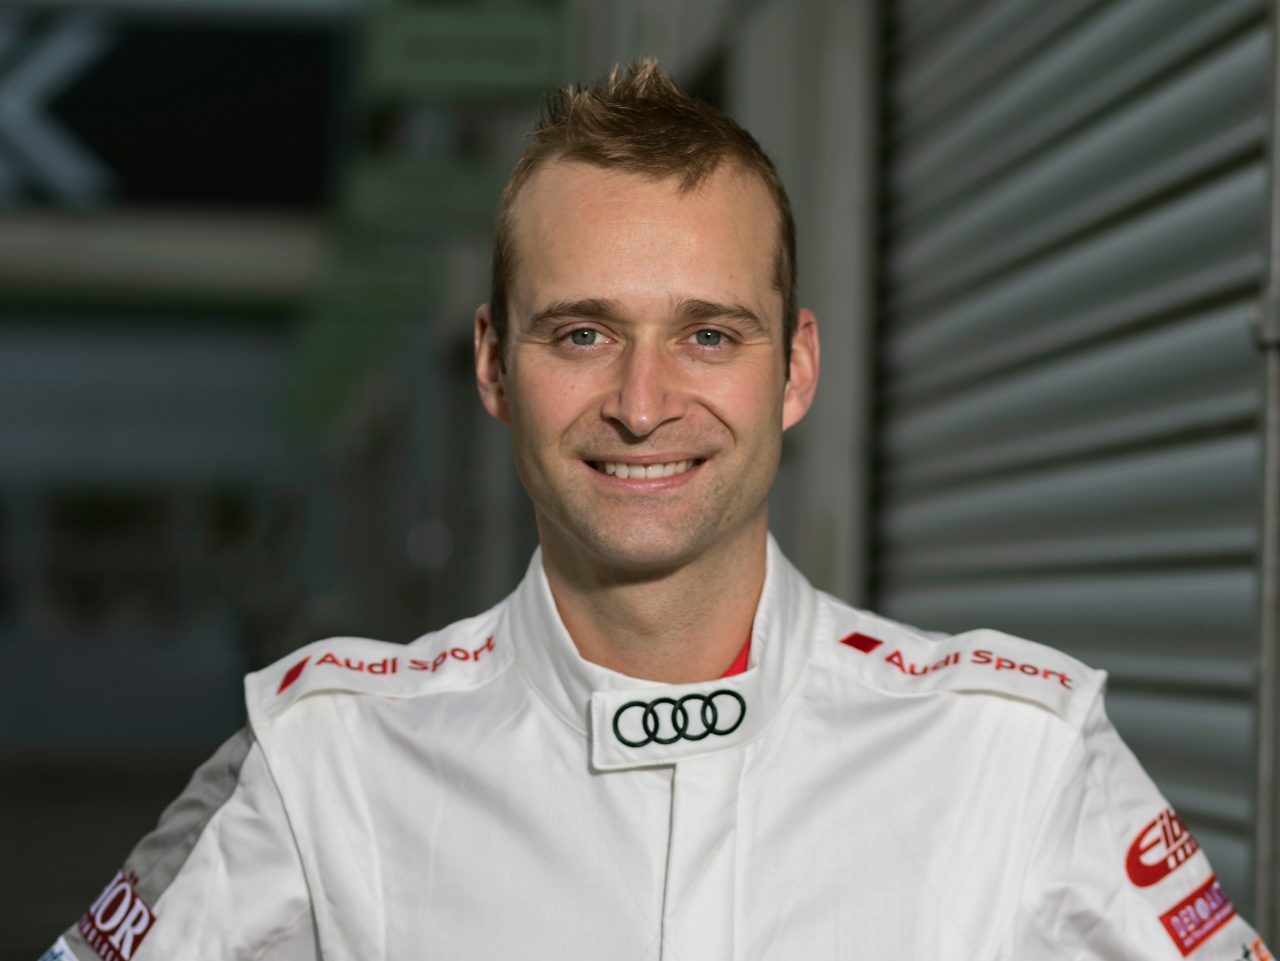 Audi Sport driver Christopher Haase